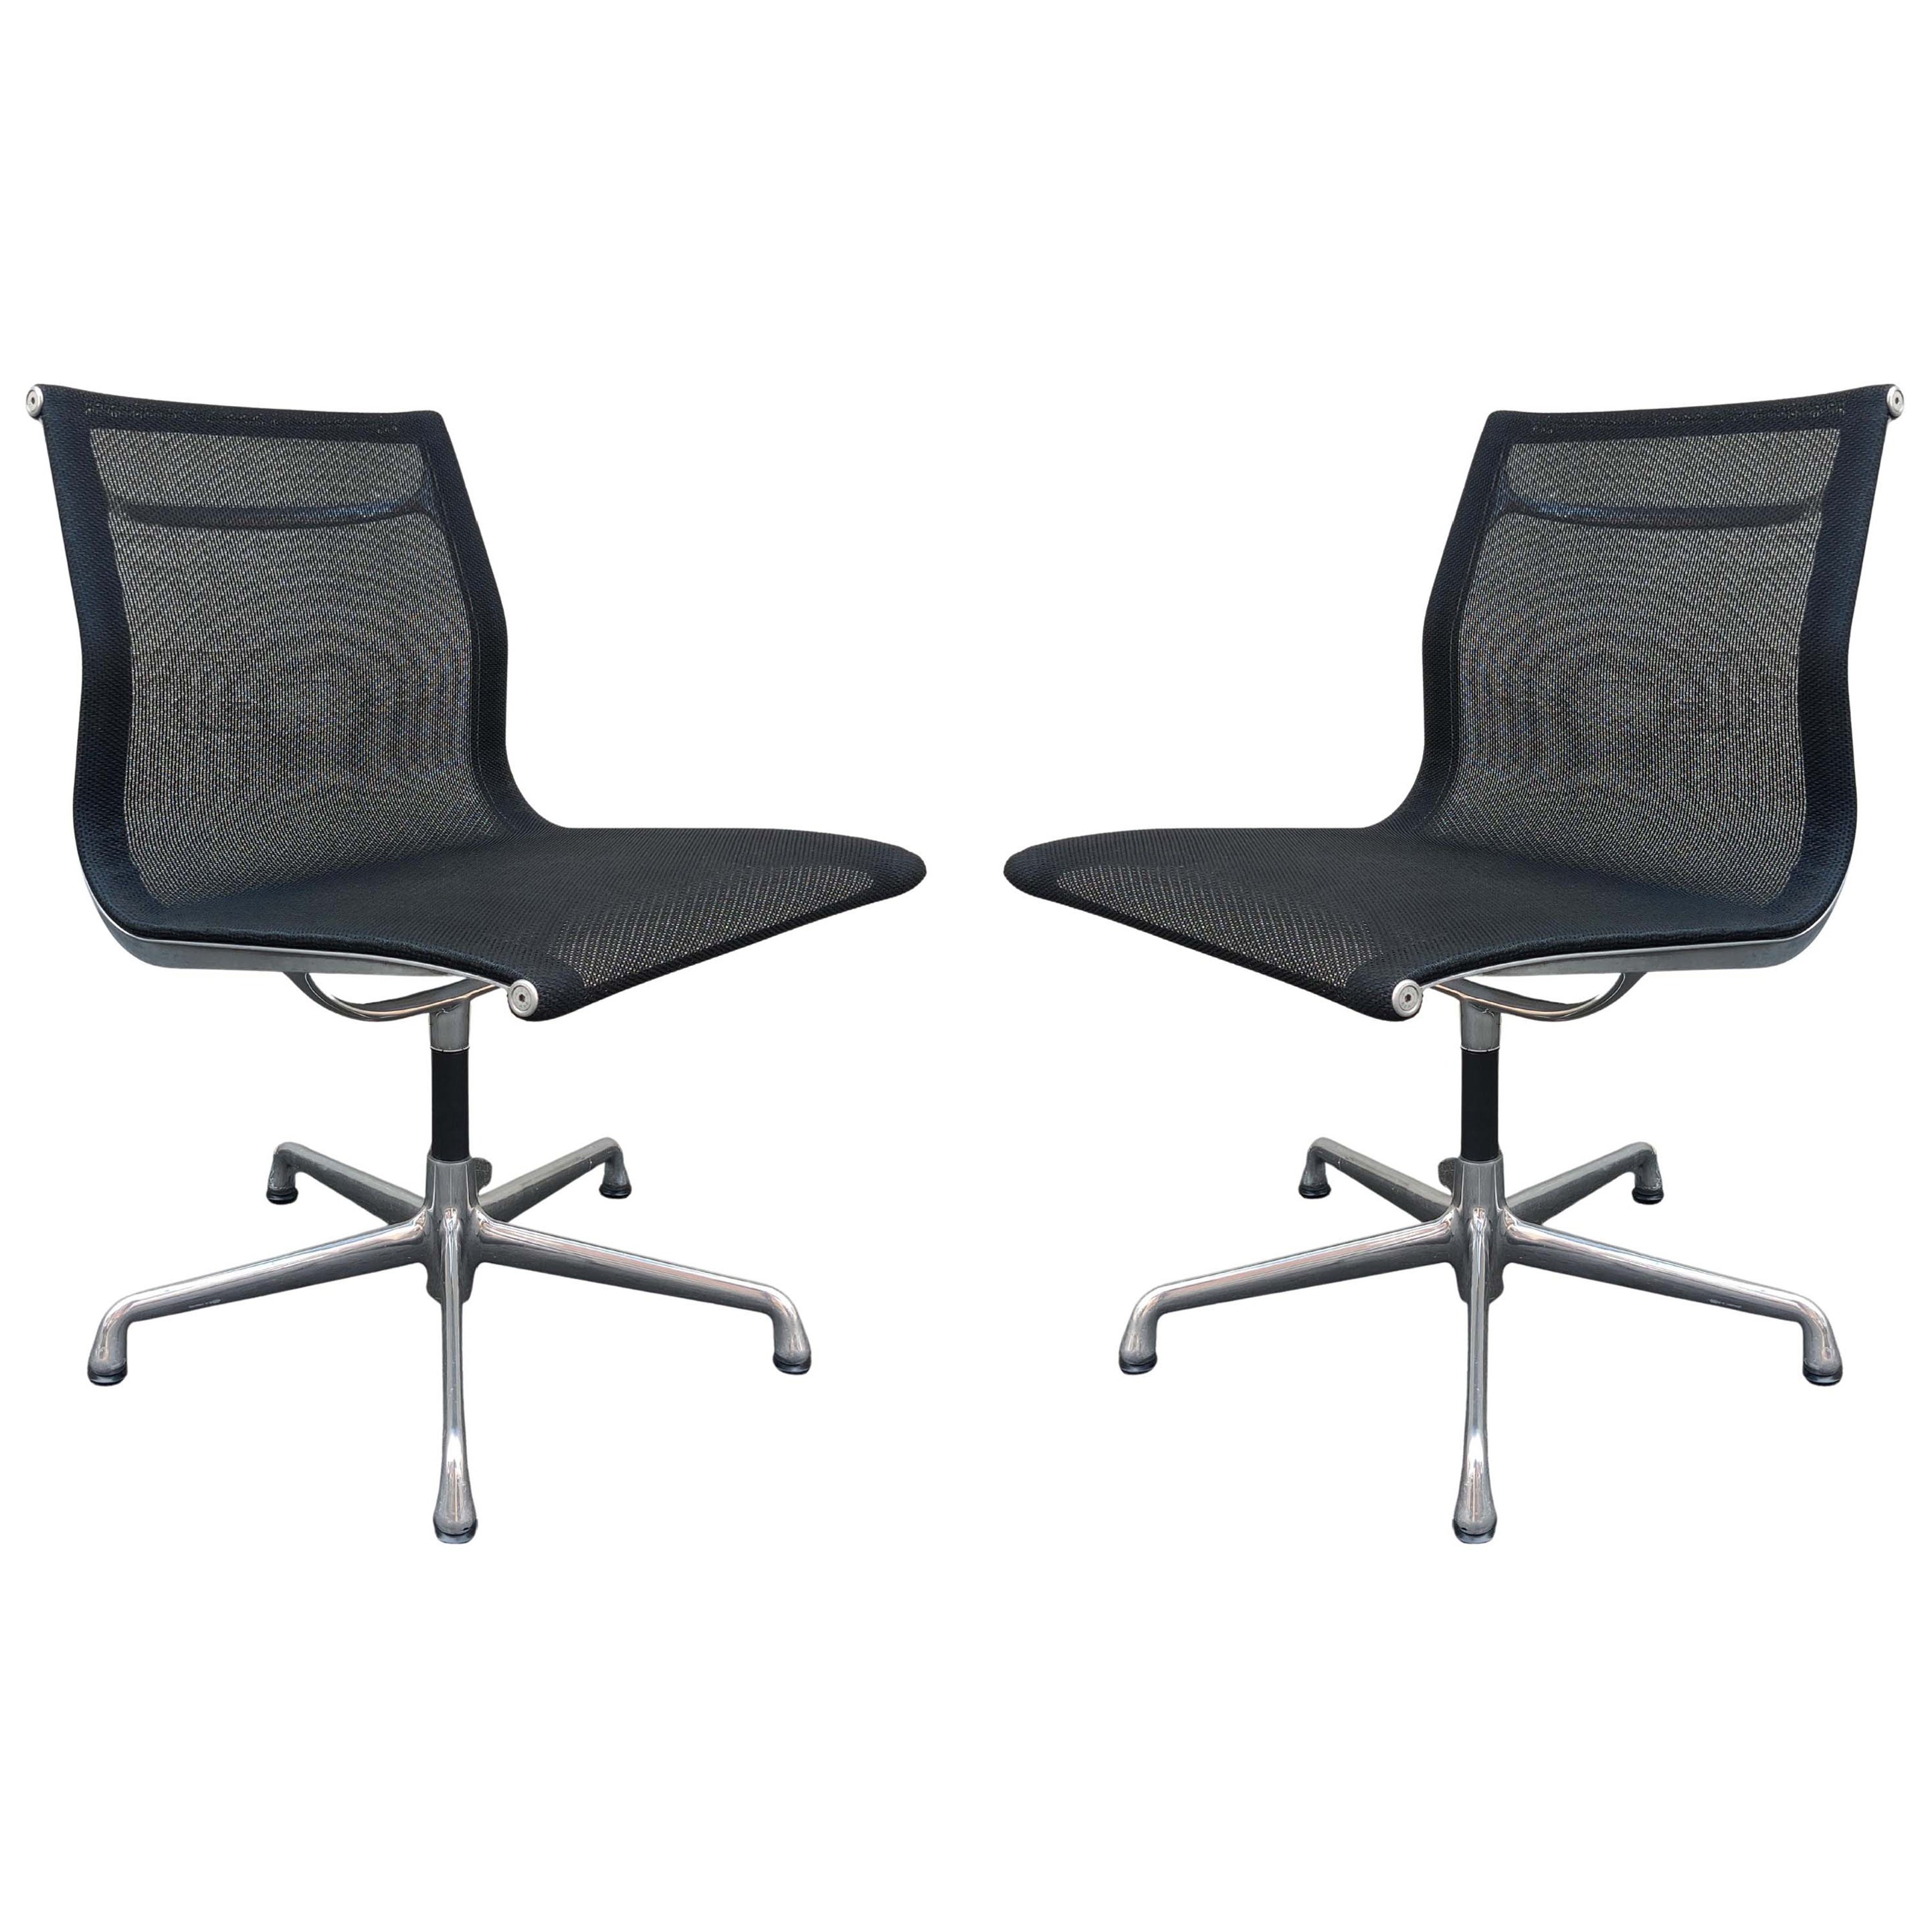 Pair of Herman Miller Eames Aluminum Group Management Side Chair Black Mesh